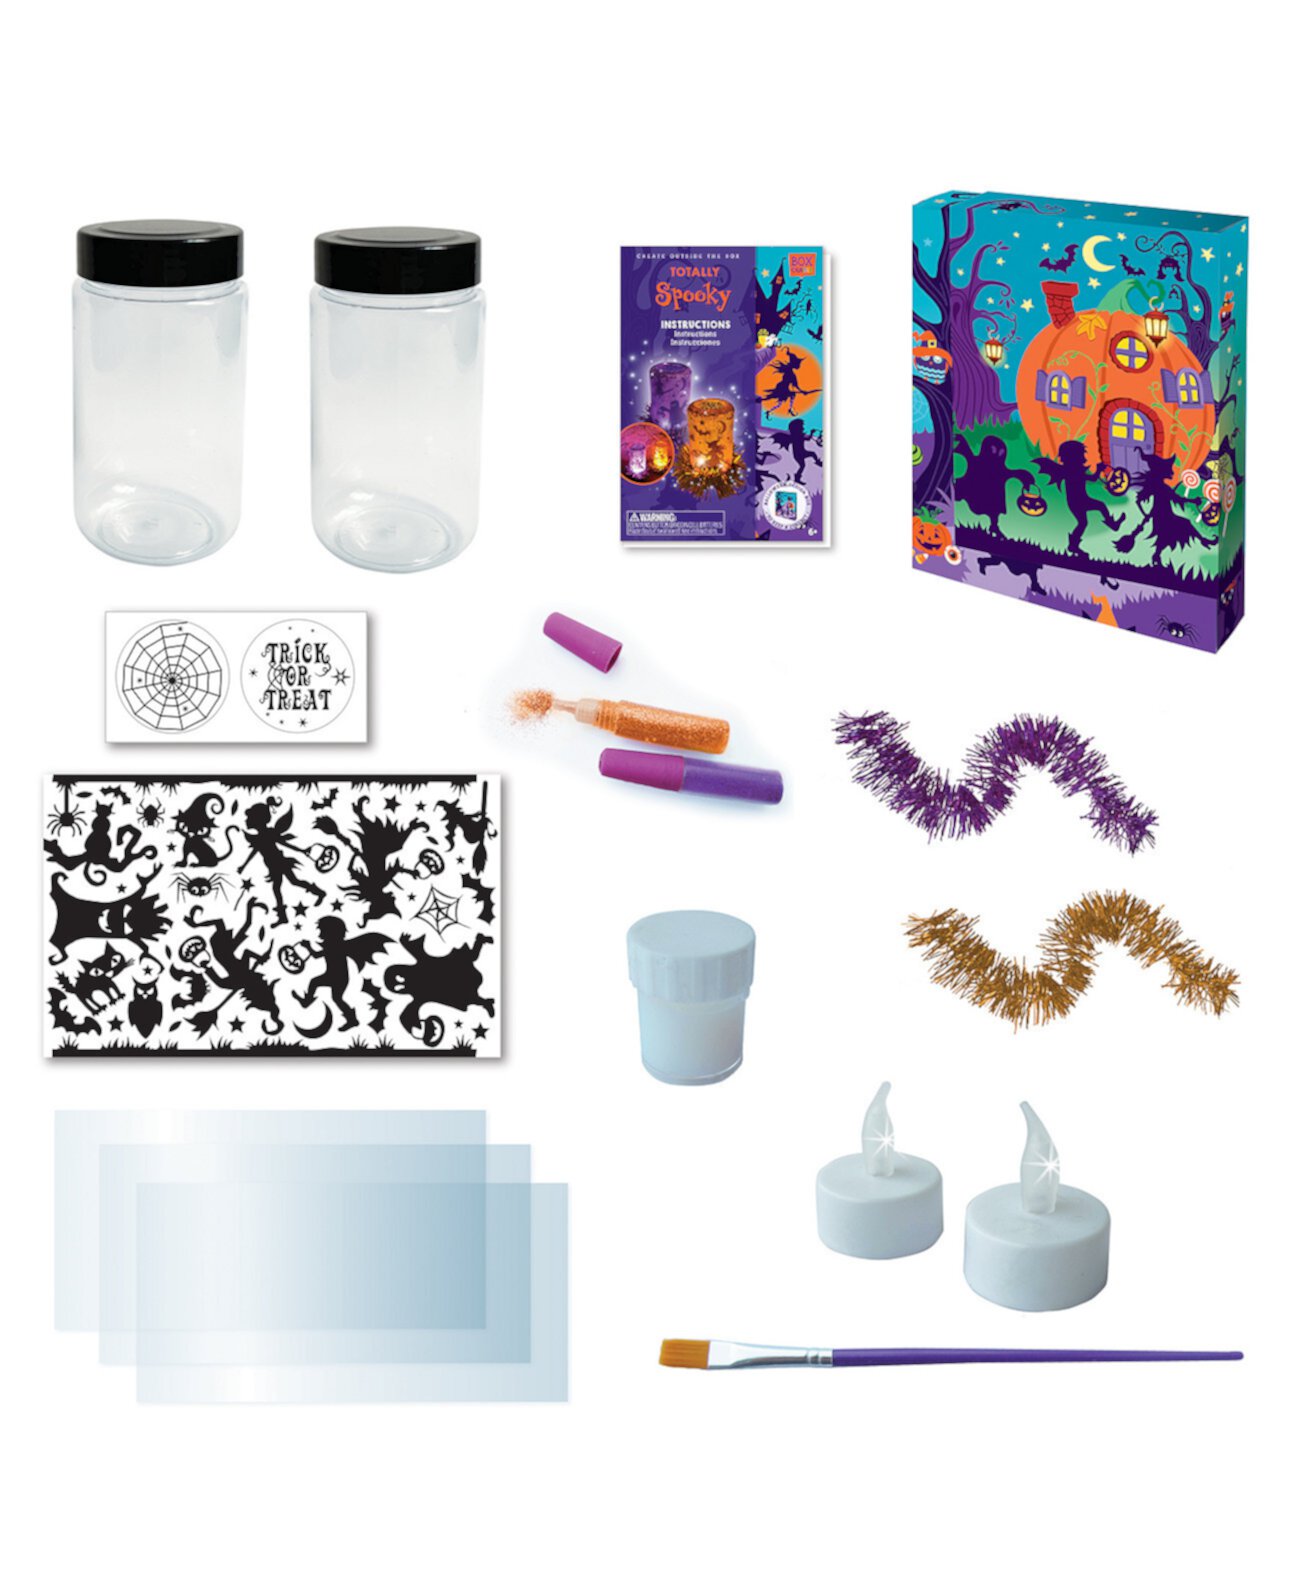 Totally Spooky Halloween Night Light Jars Set, 15 Pieces Box CanDIY